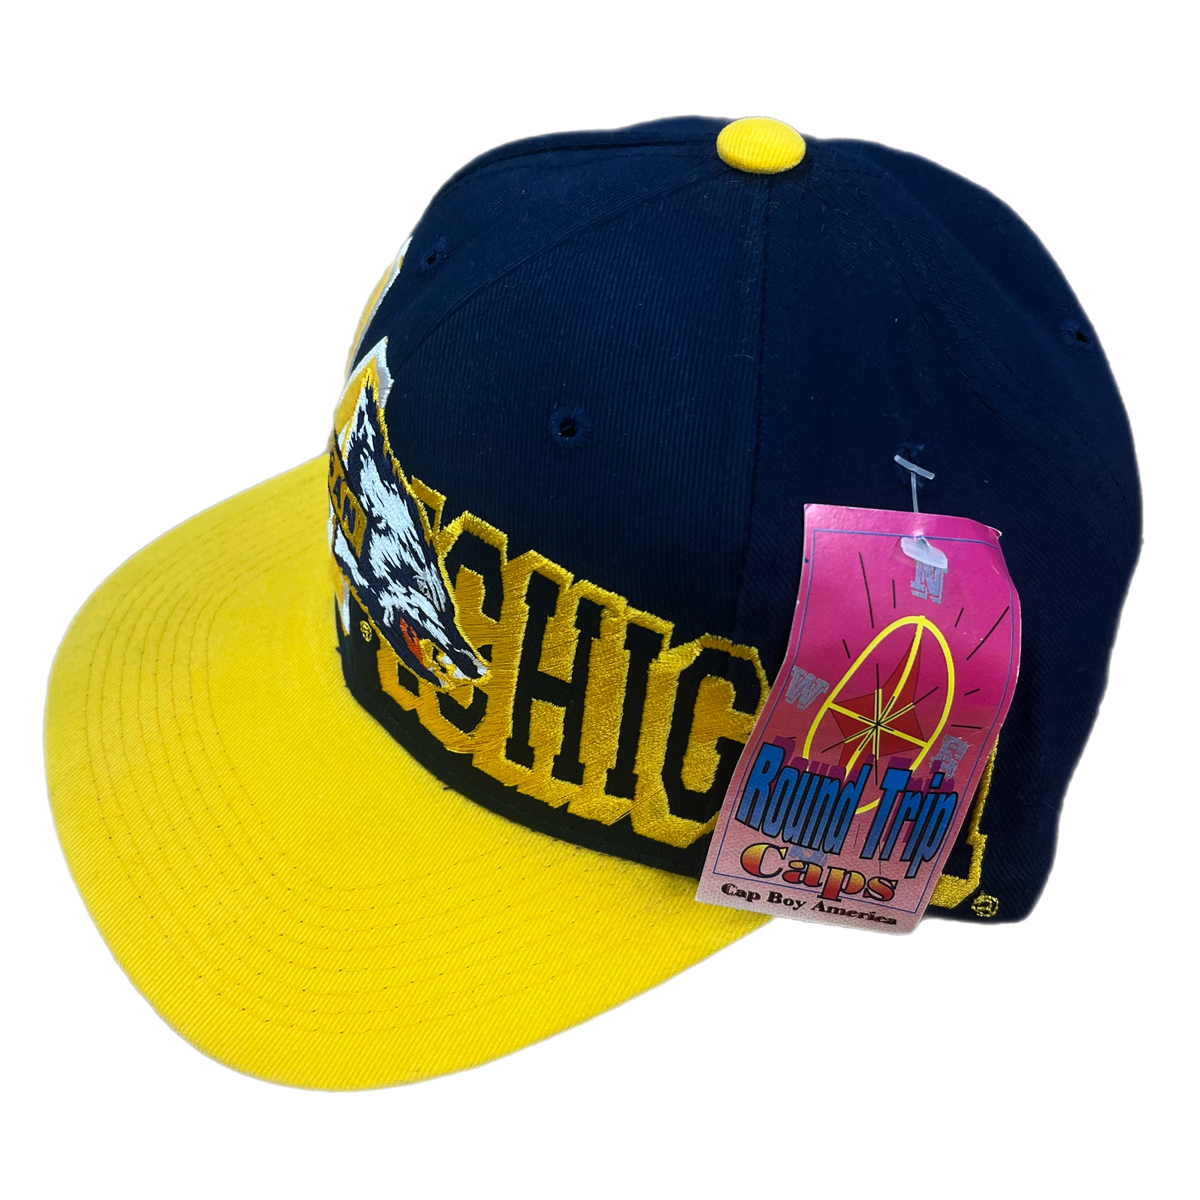 Vintage University Of Michigan &quot;Wolverines&quot; Snapback Hat